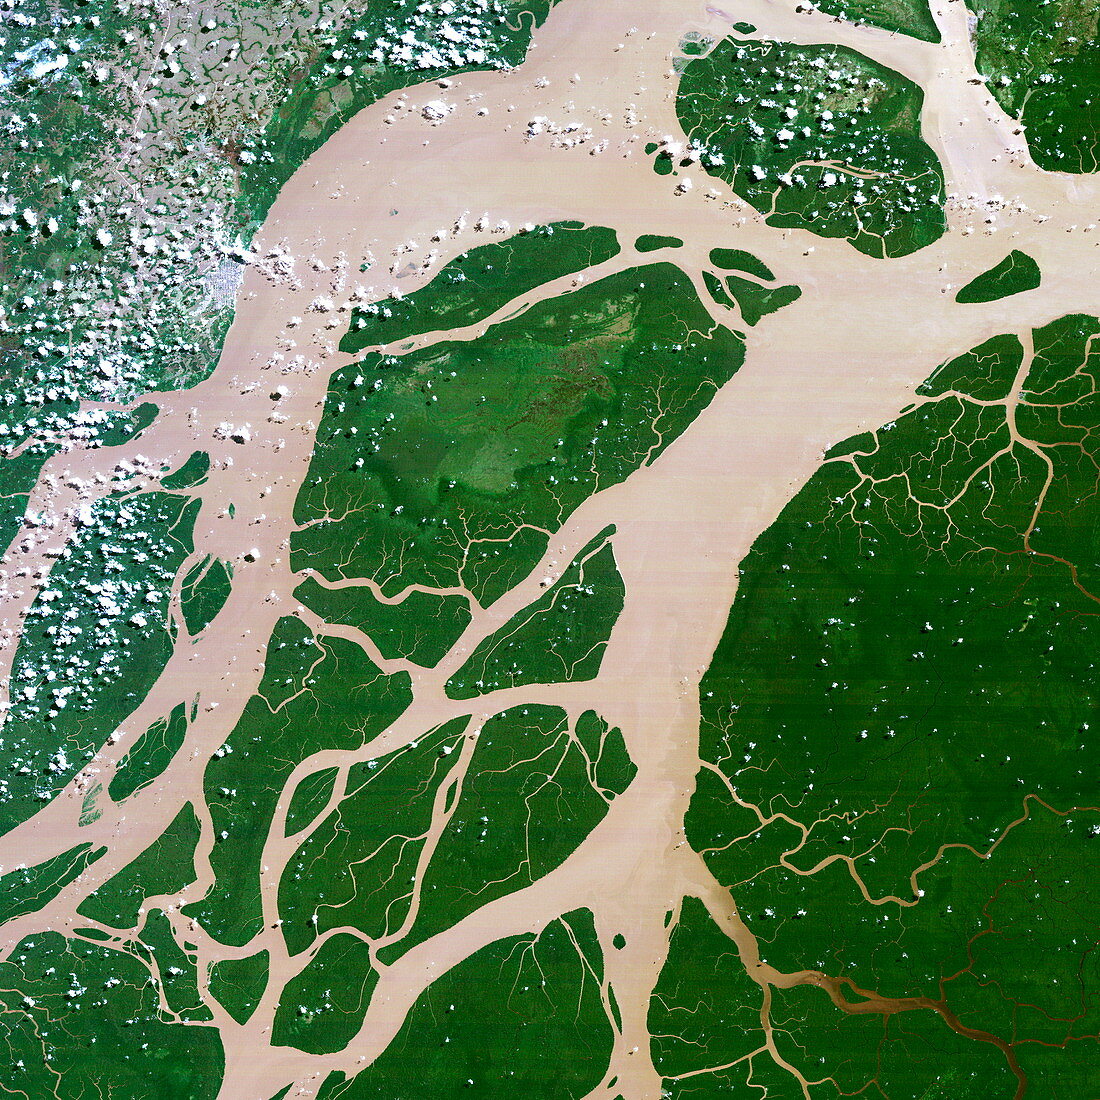 Amazon delta,Brazil